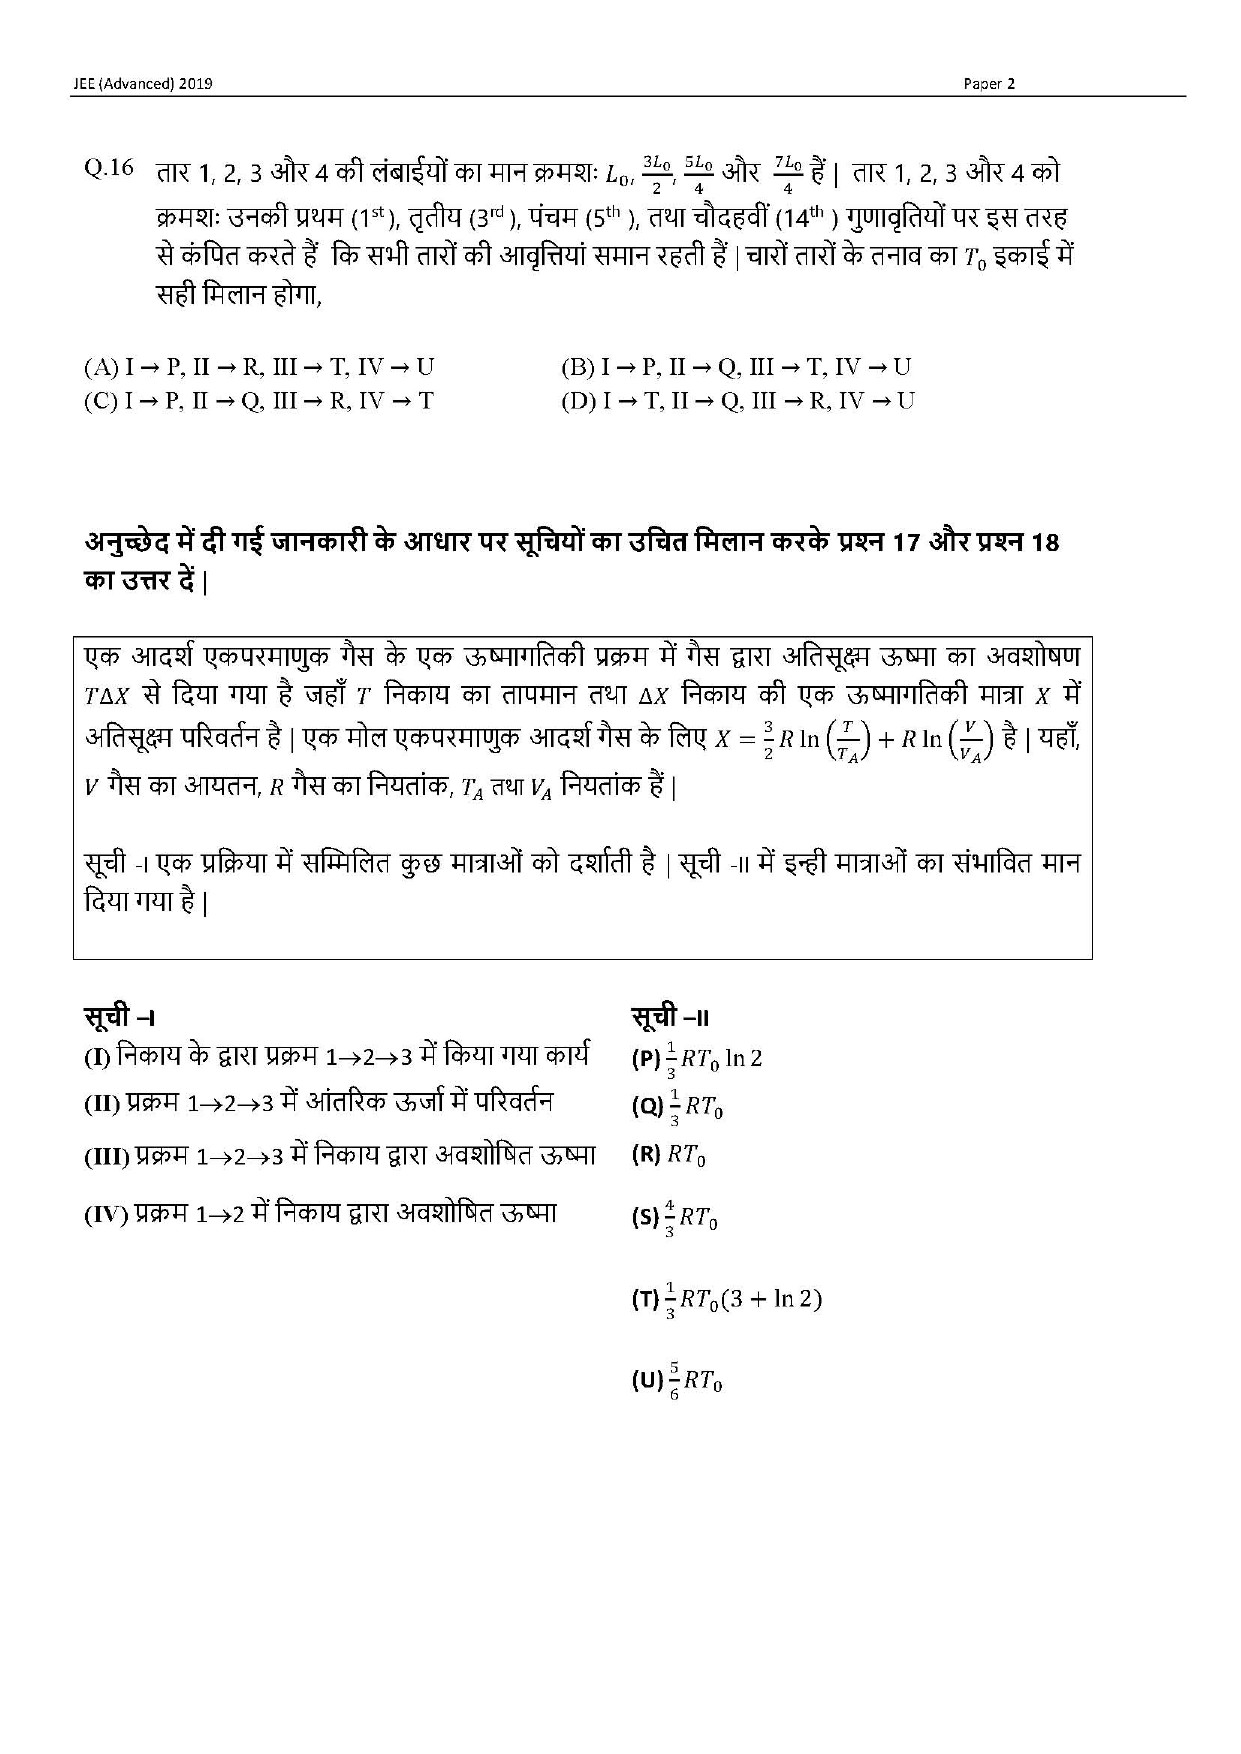 JEE Advanced Hindi Question Paper 2019 Paper 2 Physics 13